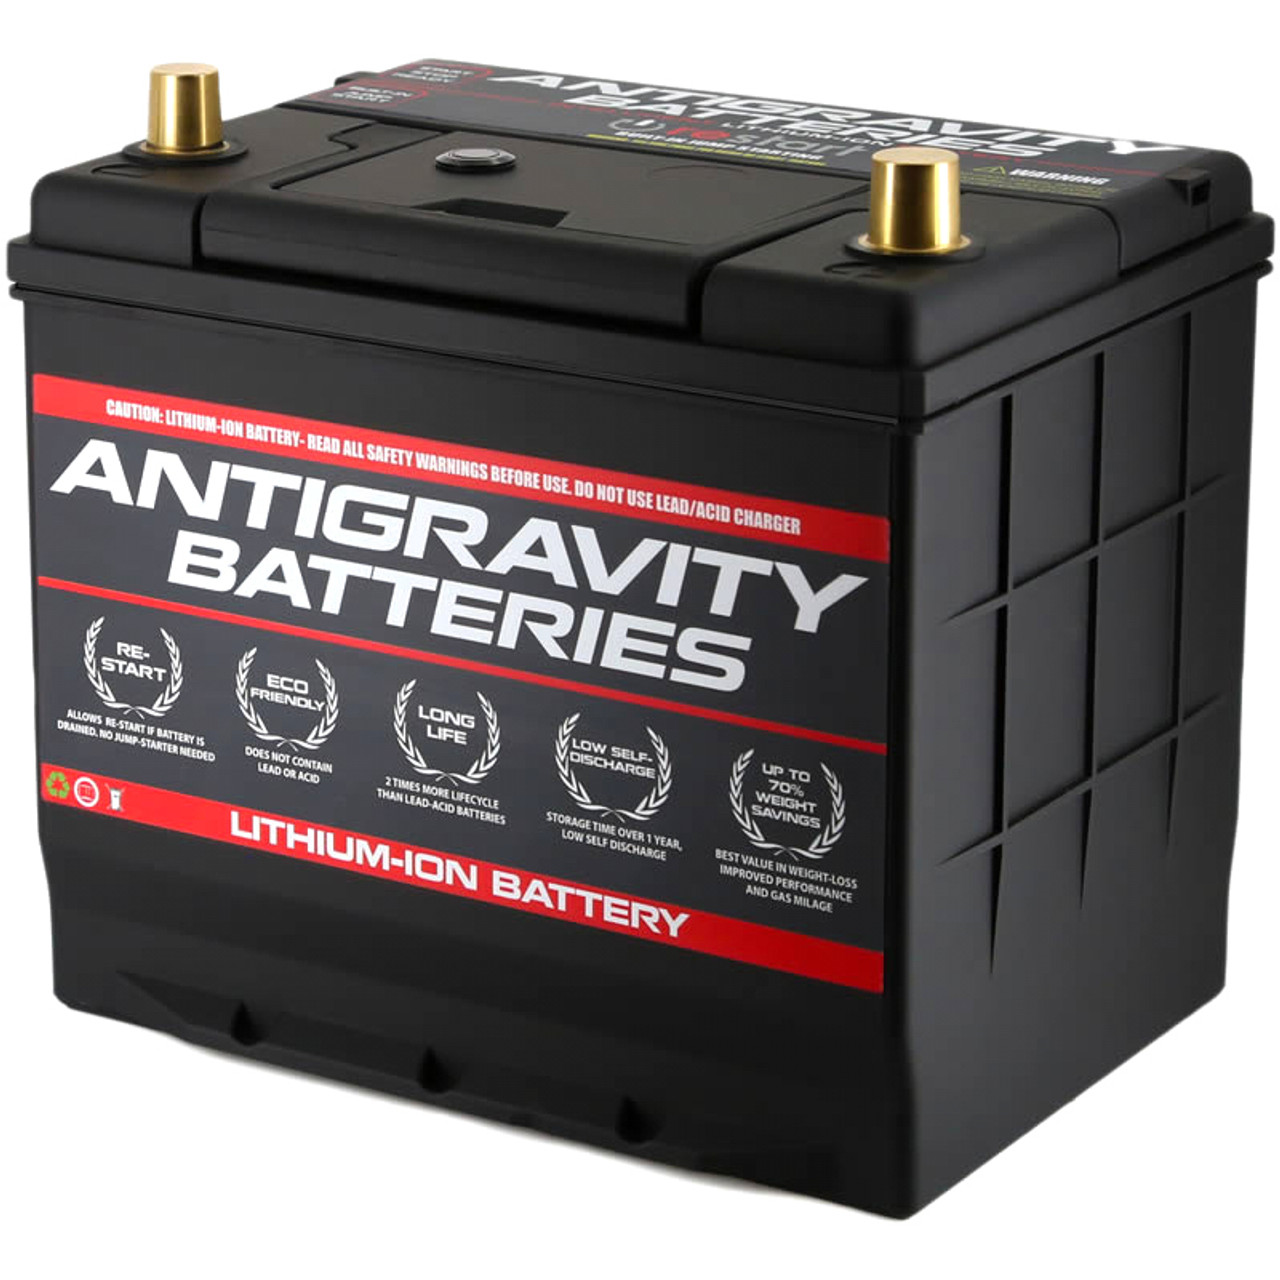 Antigravity ATX12-HD-RS, 480 CCA Battery